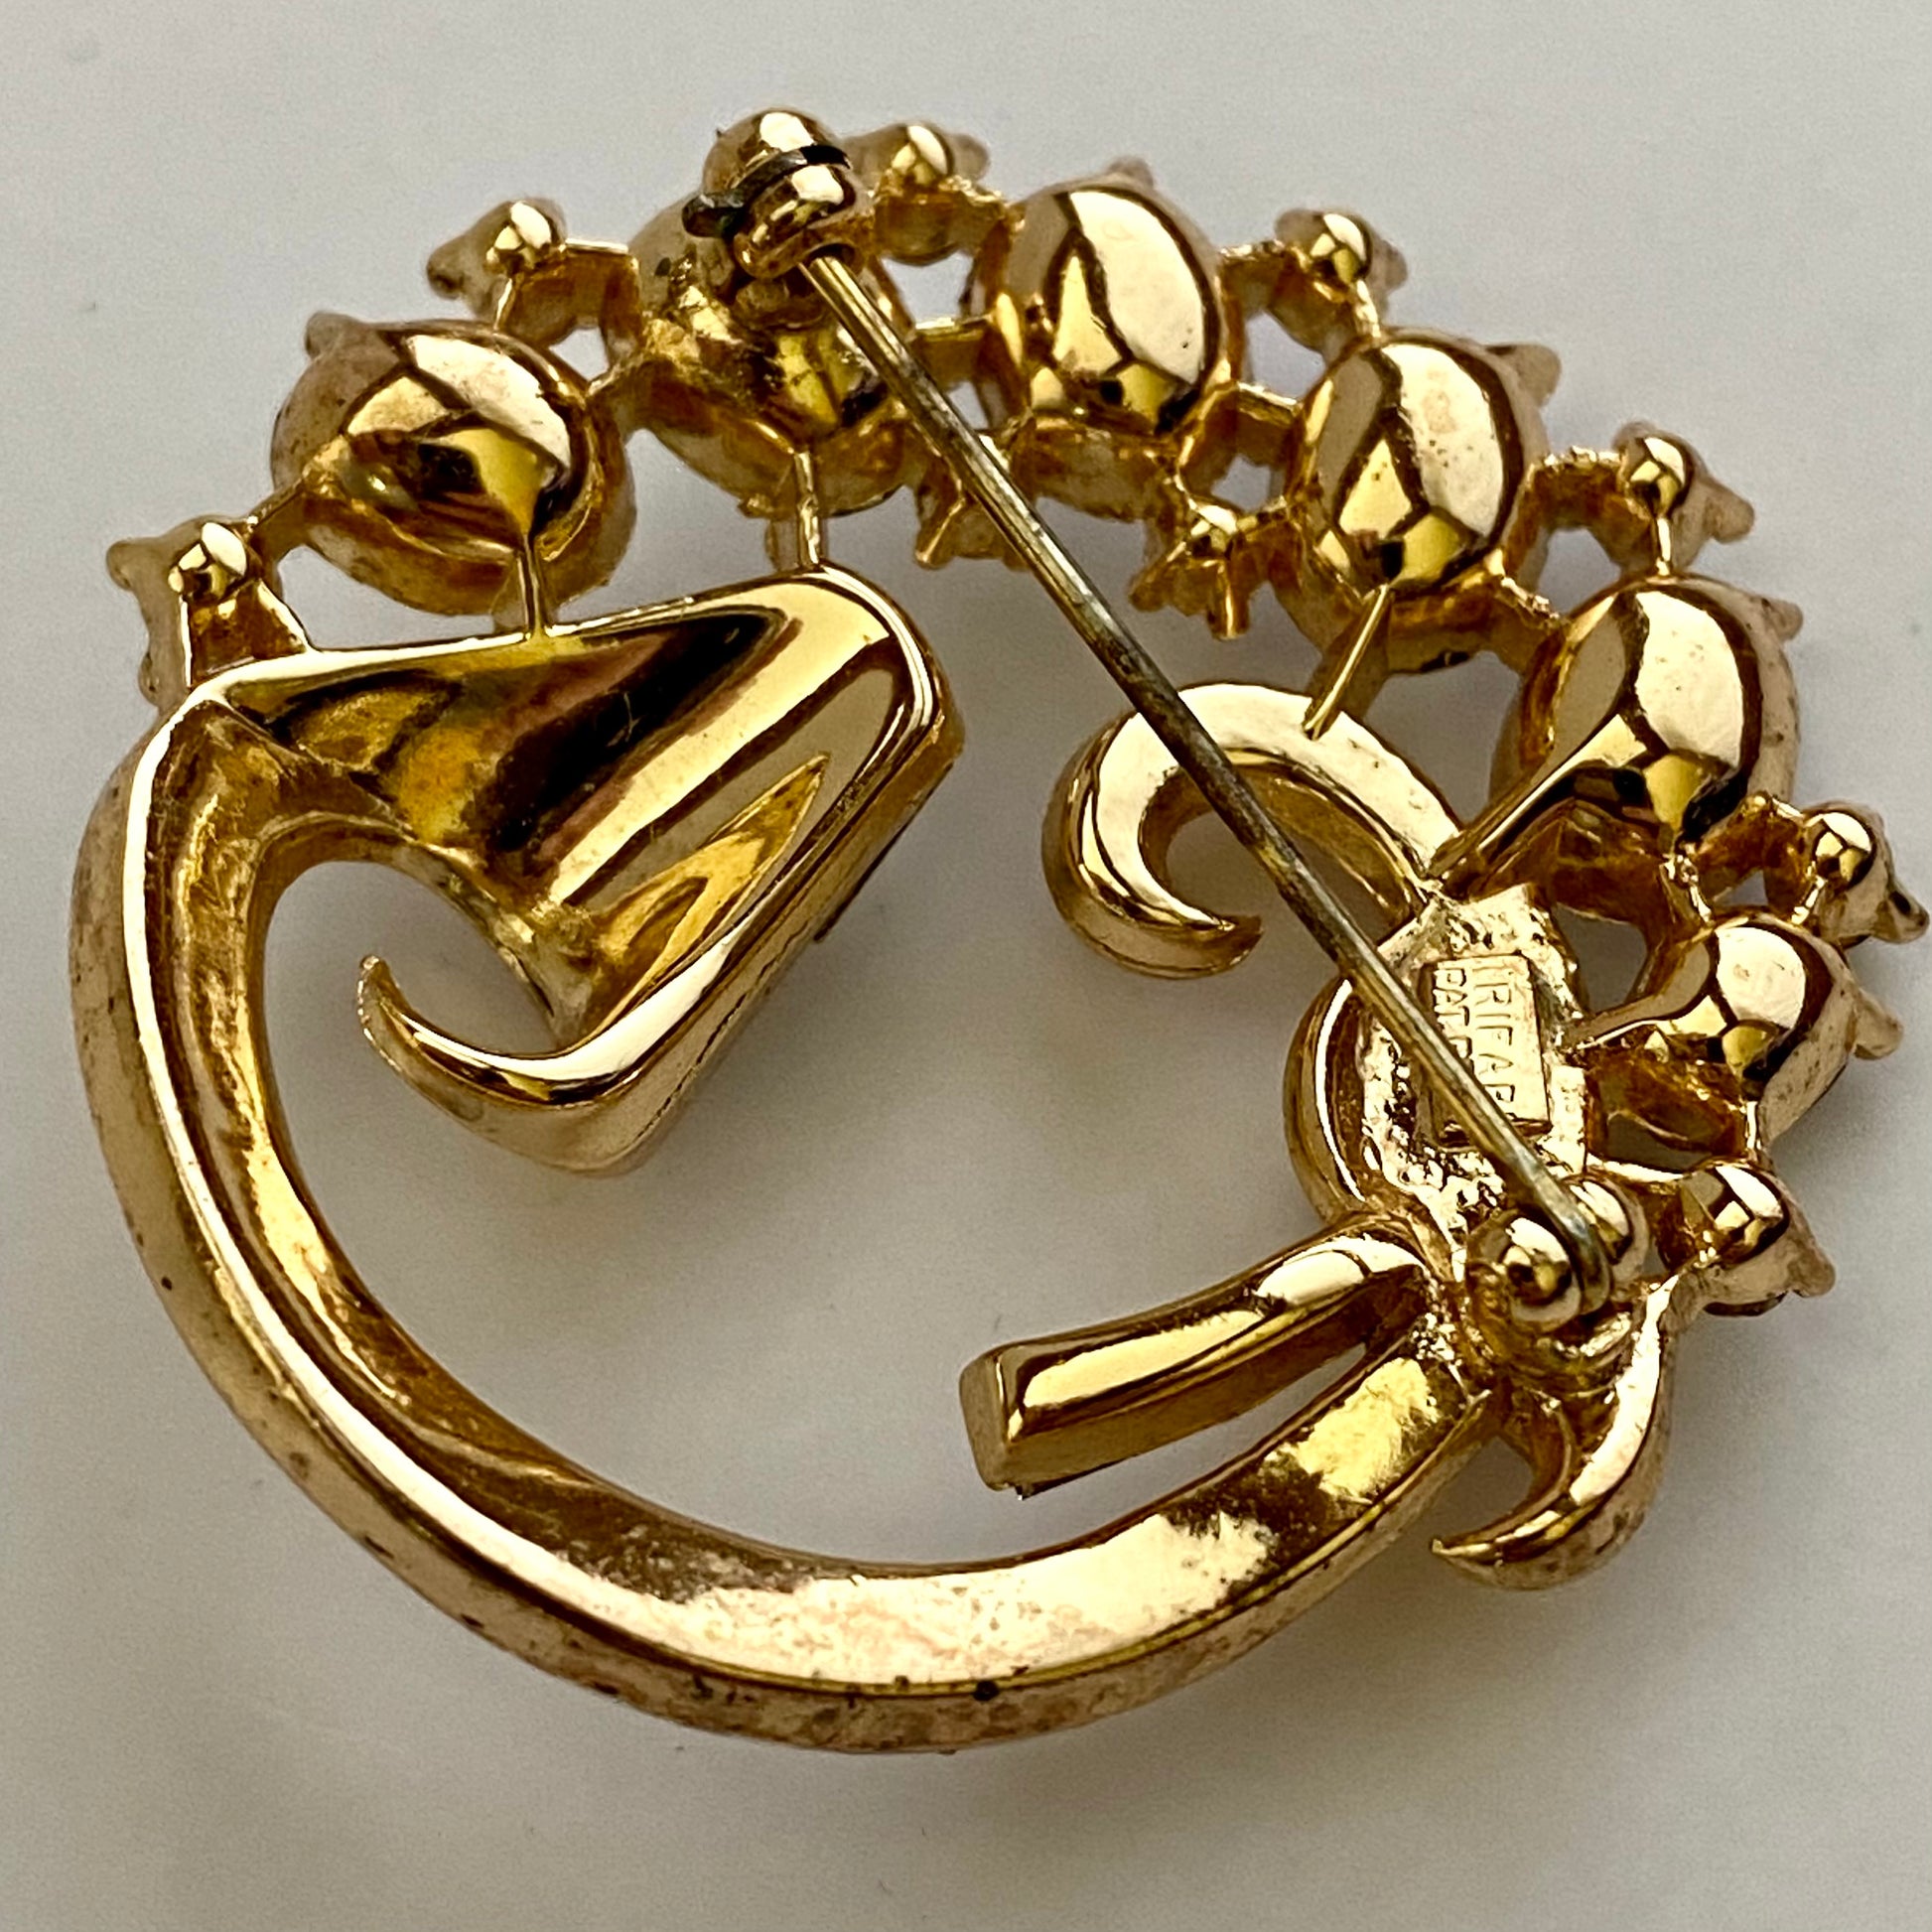 Capri Jewelry Brooch - 1960's Enamel and Bead Pin